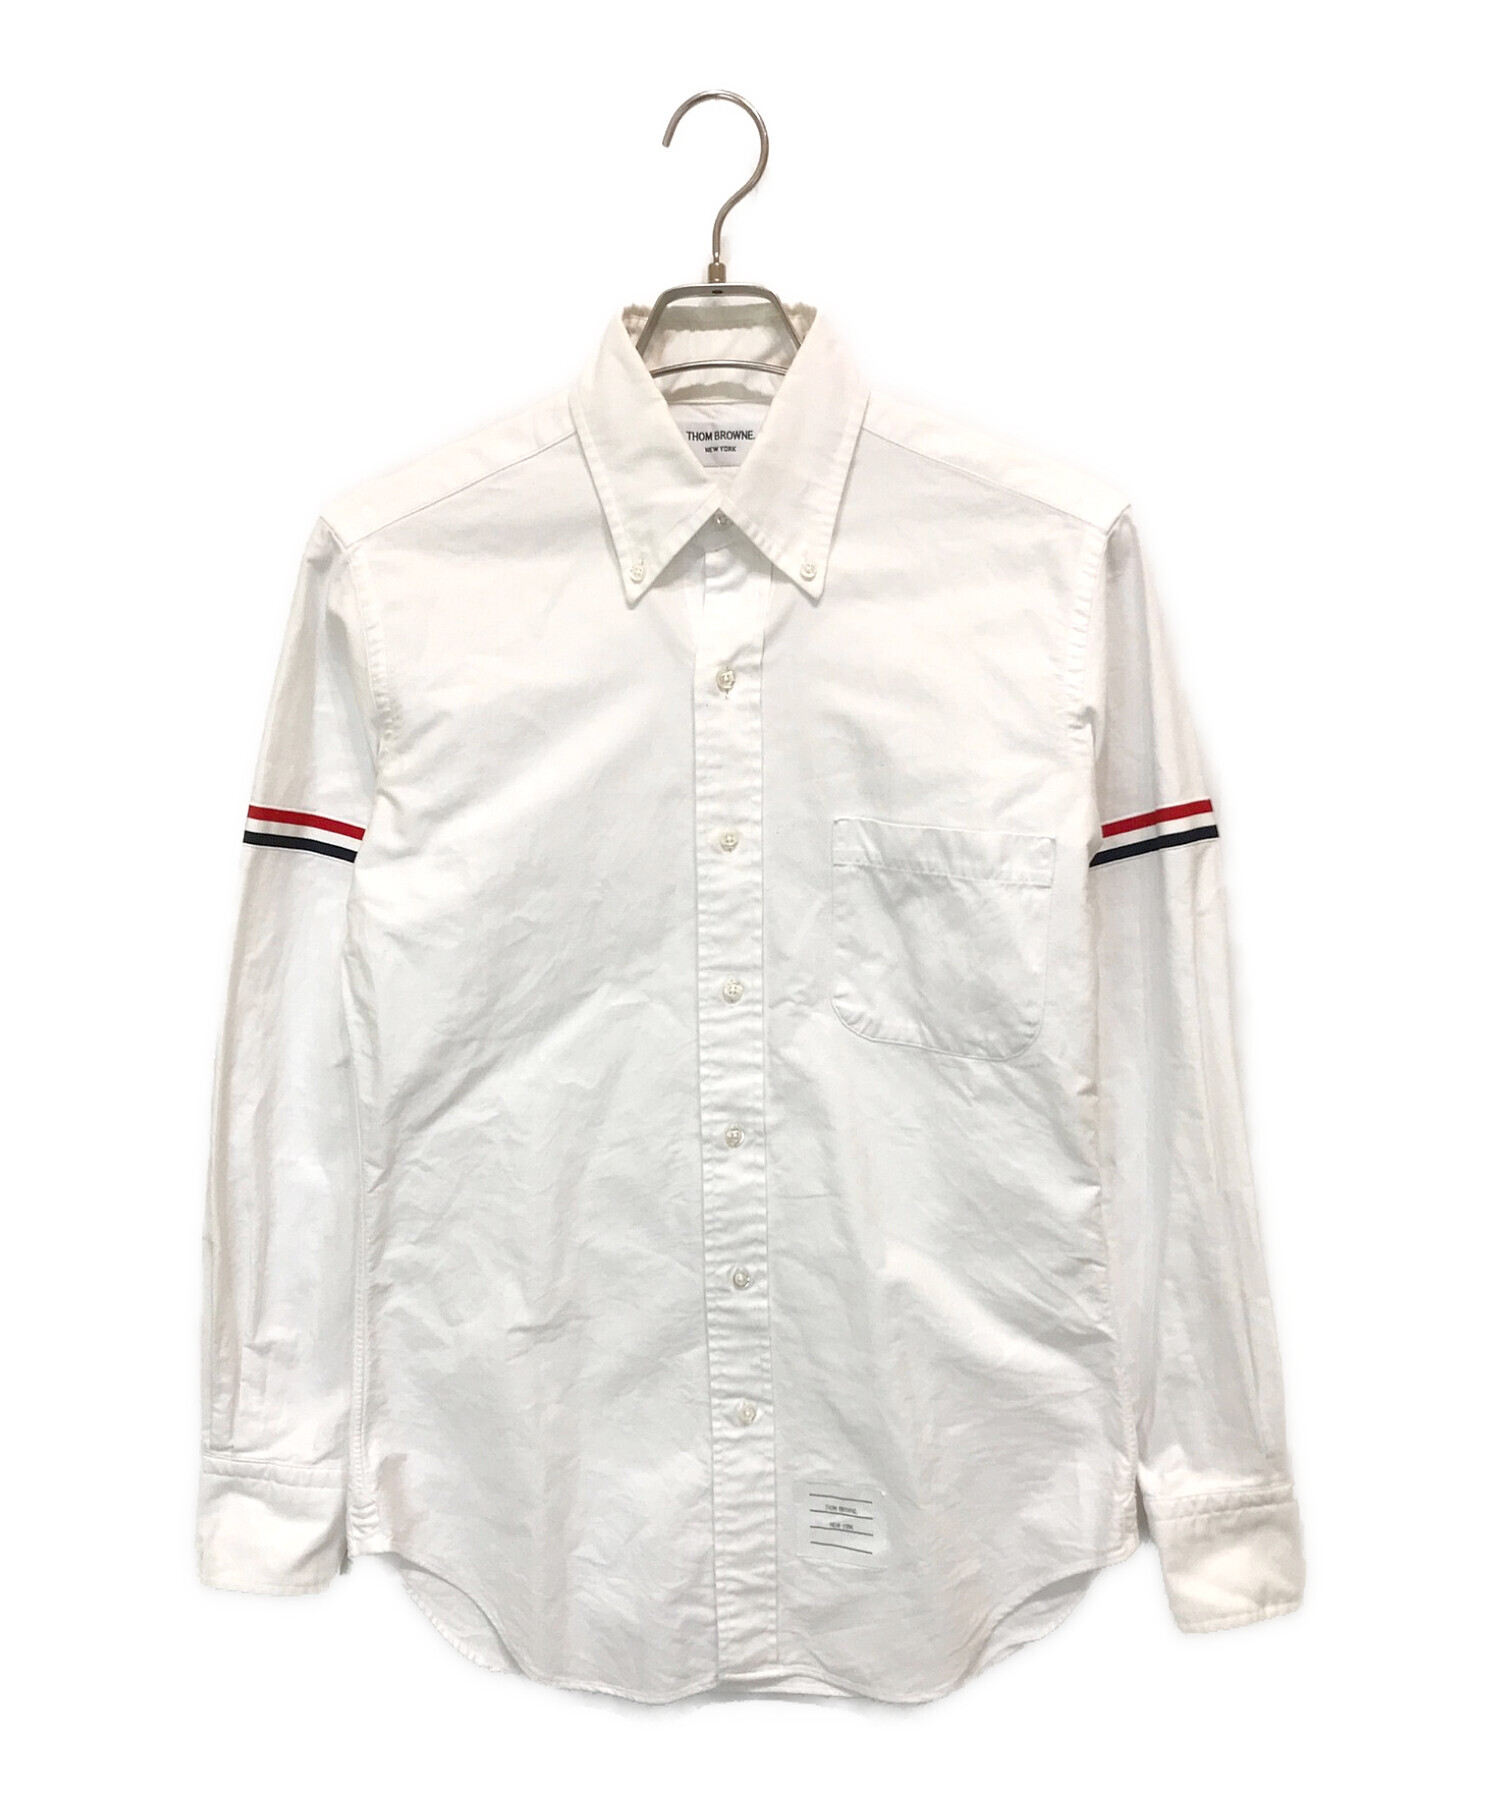 Thom Browne (トムブラウン) トリコロールシャツ ホワイト サイズ:1